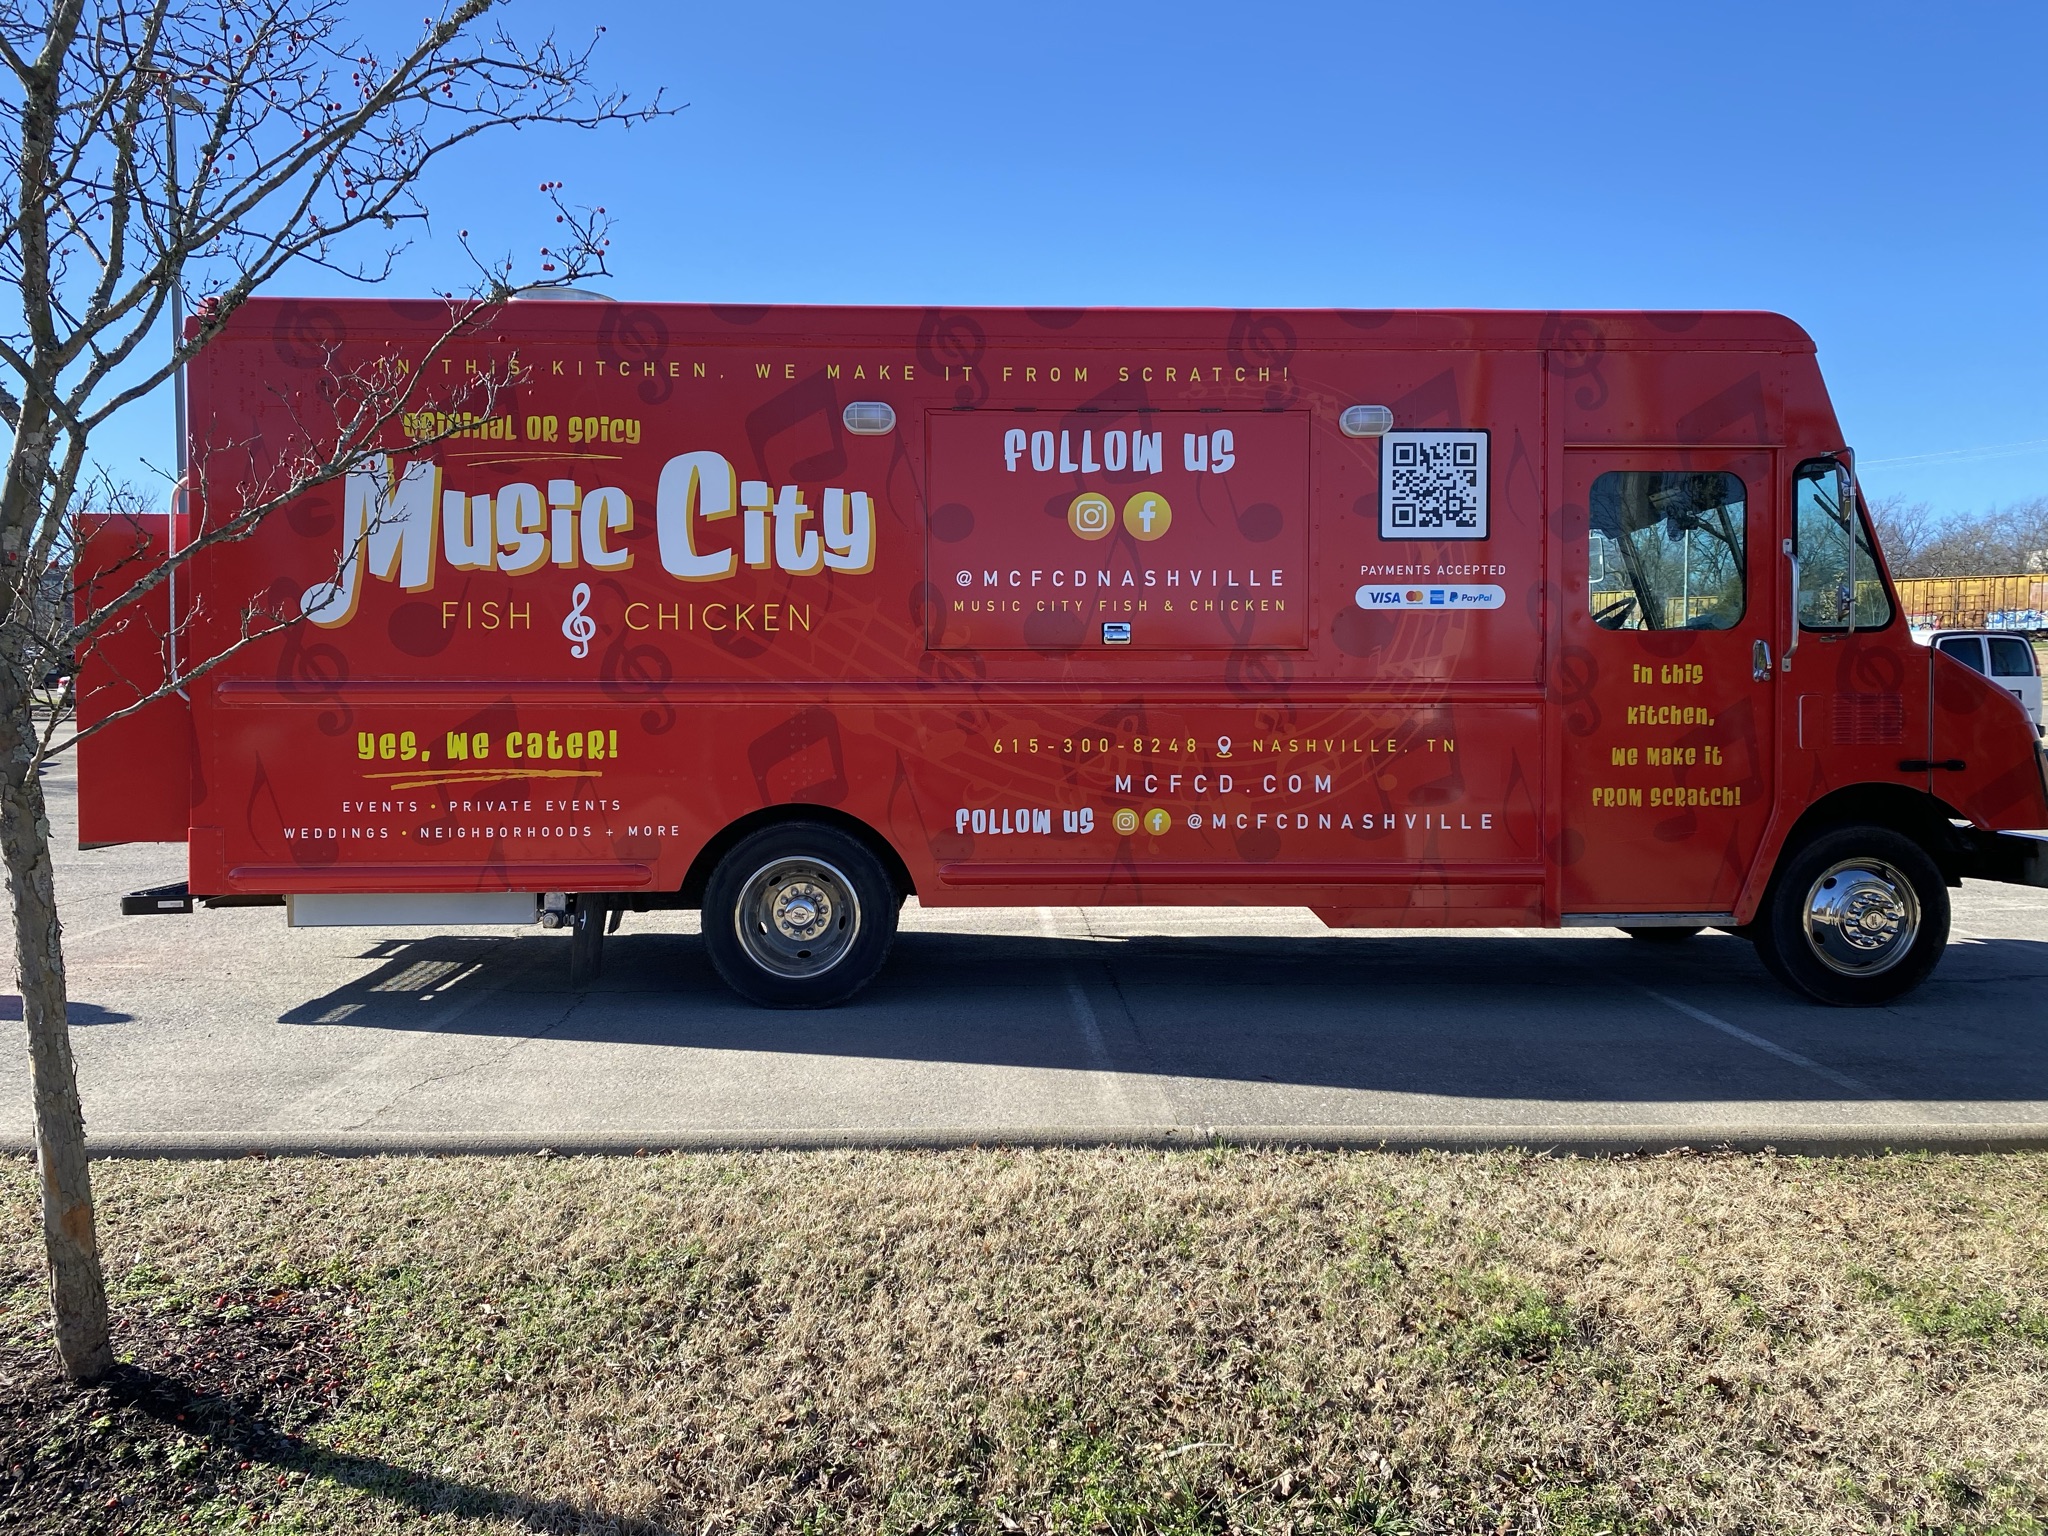 Music City Fish & Chicken food truck profile image